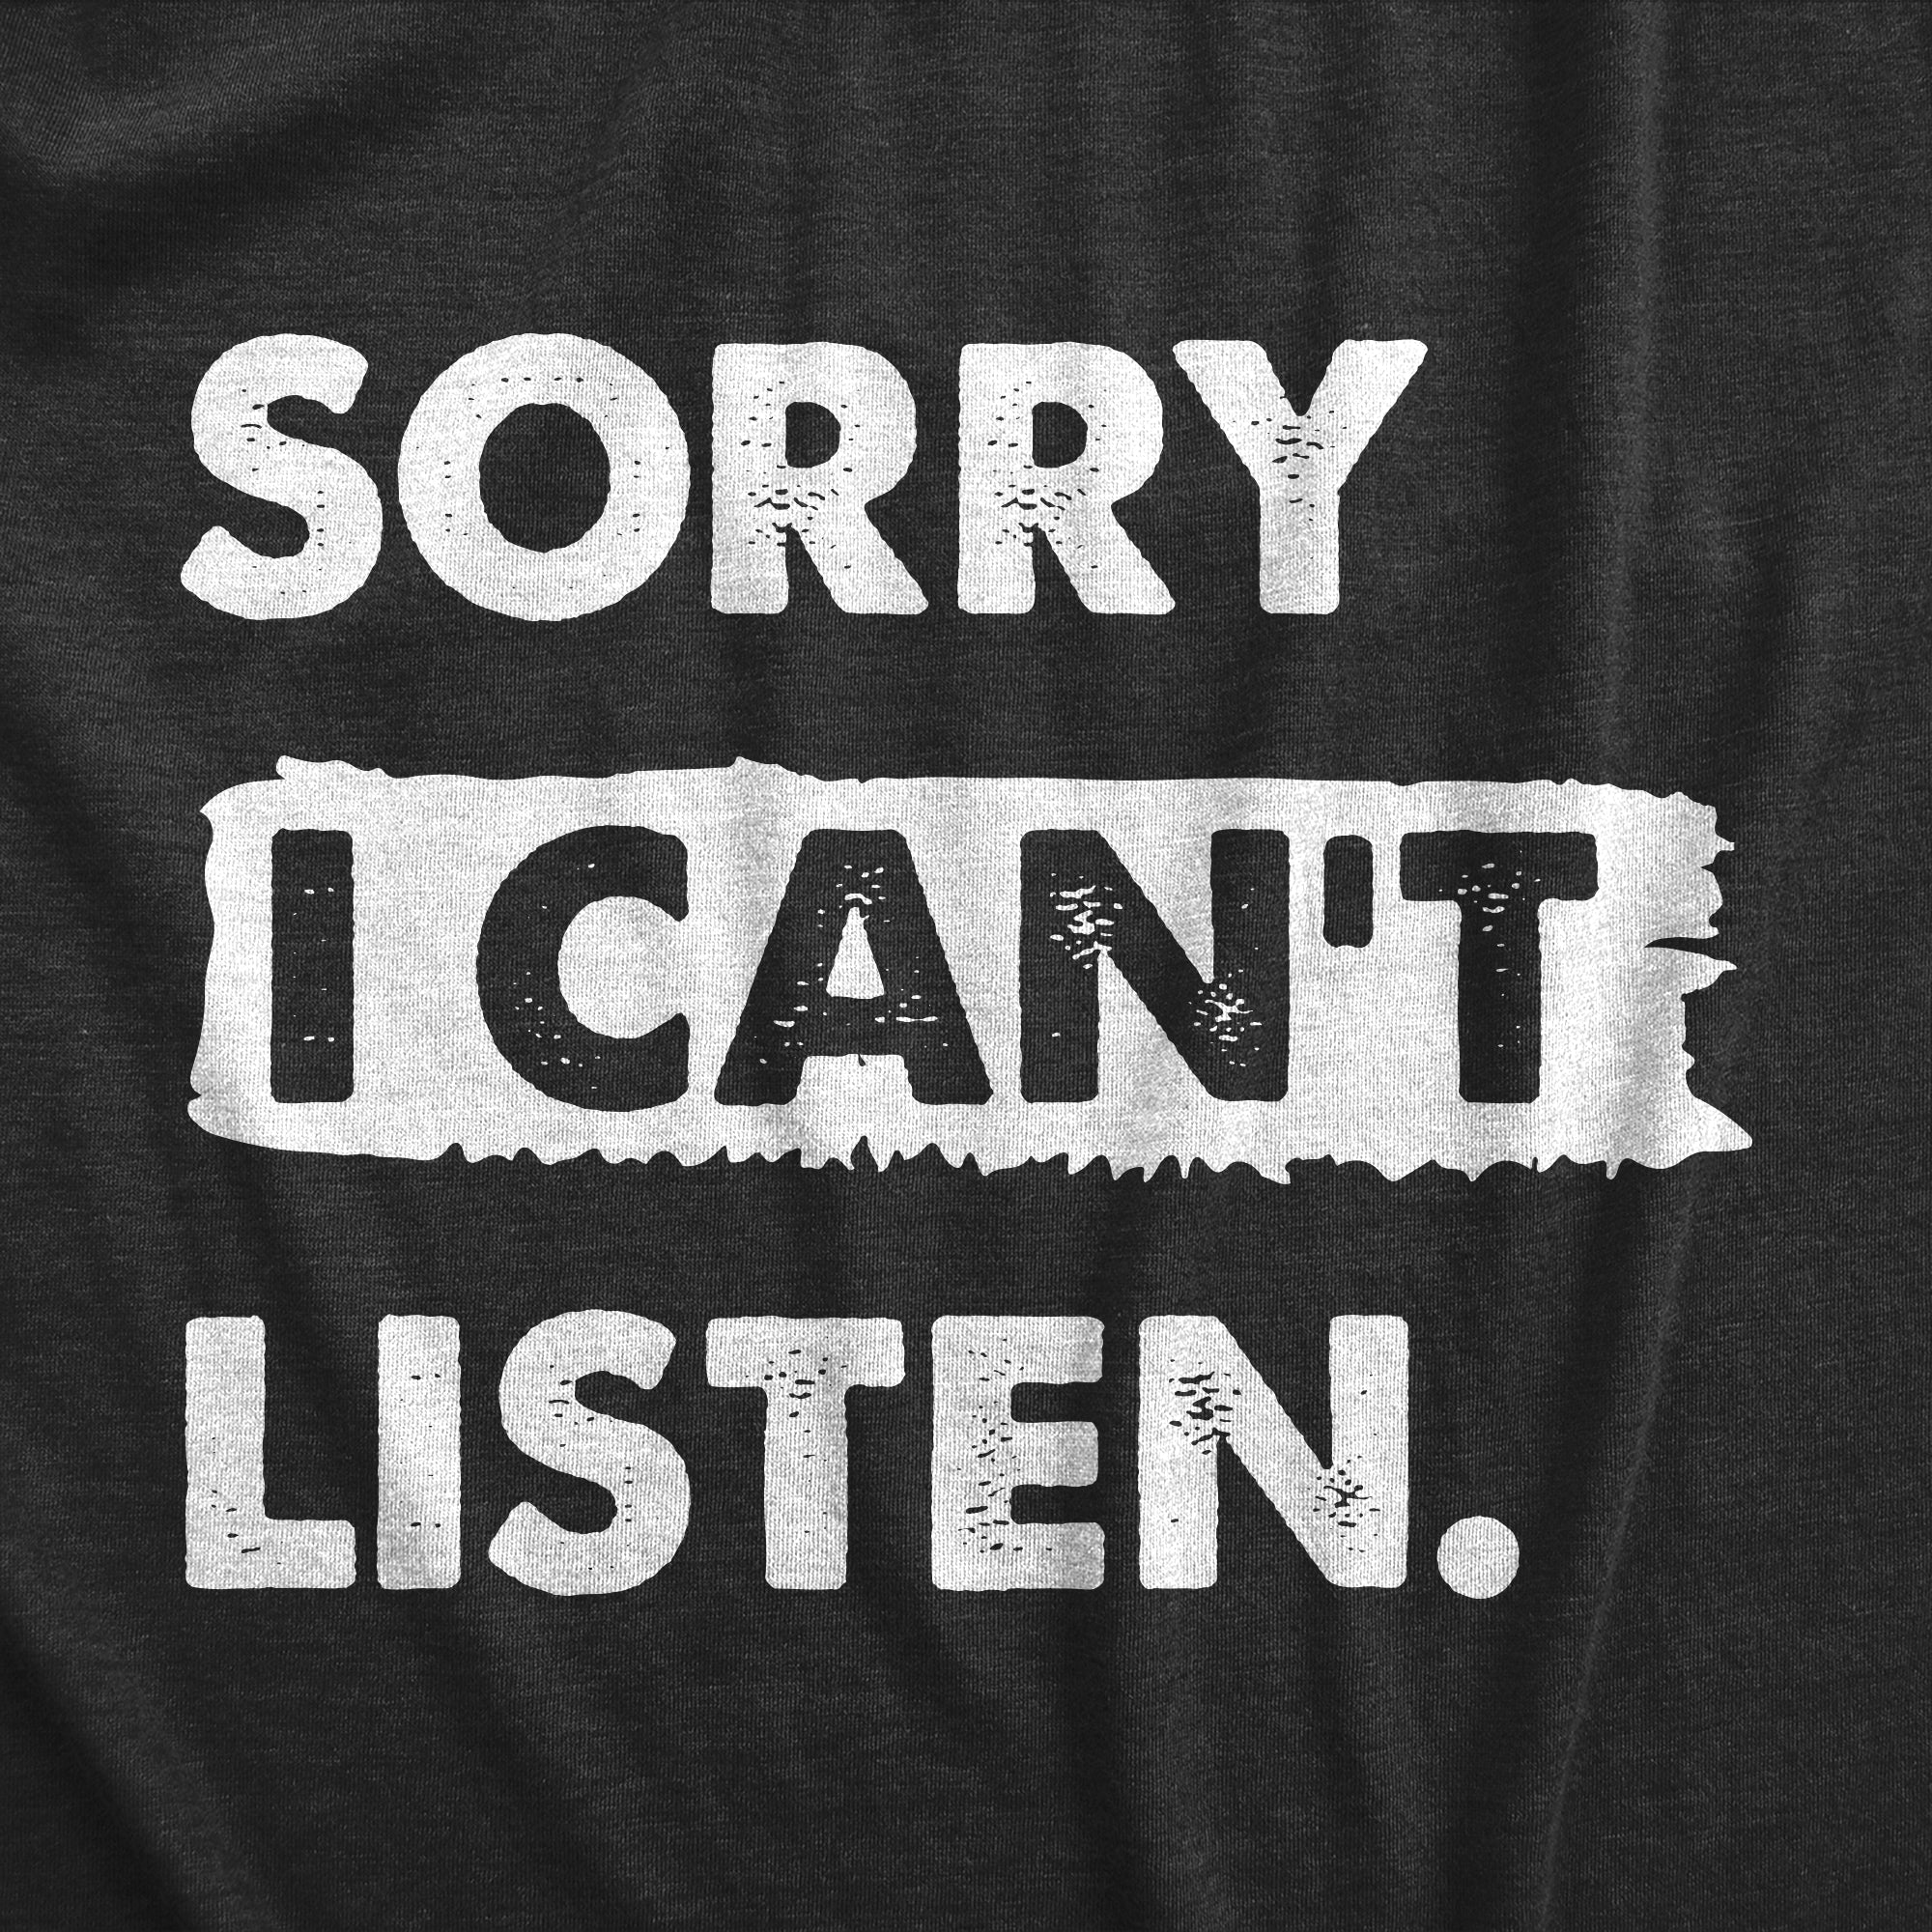 Funny Heather Black - LISTEN Sorry I Cant Listen Mens T Shirt Nerdy Sarcastic Tee